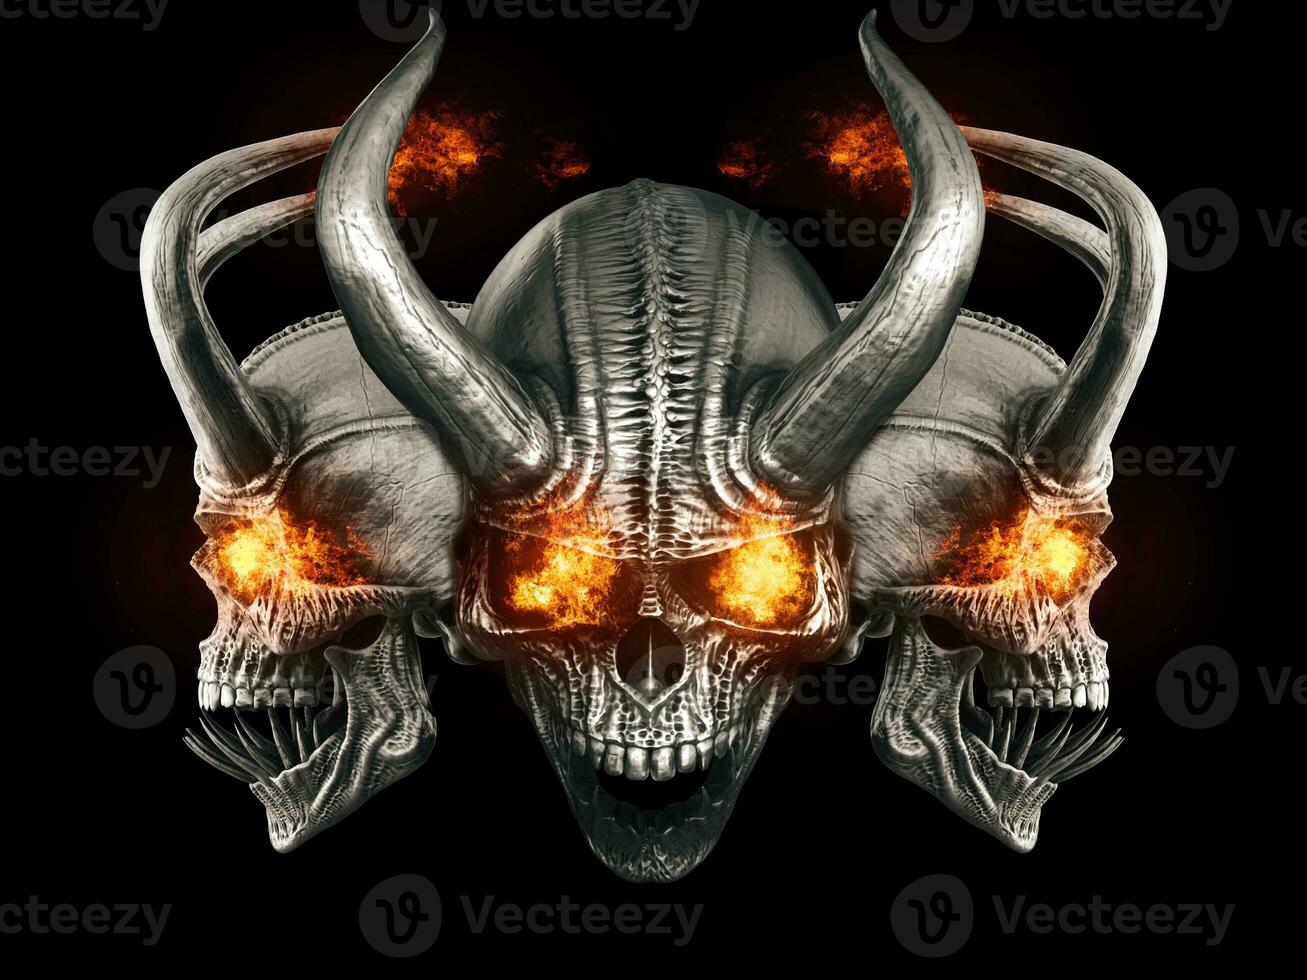 Heavy metal demon skulls with infernal flaming eyes photo